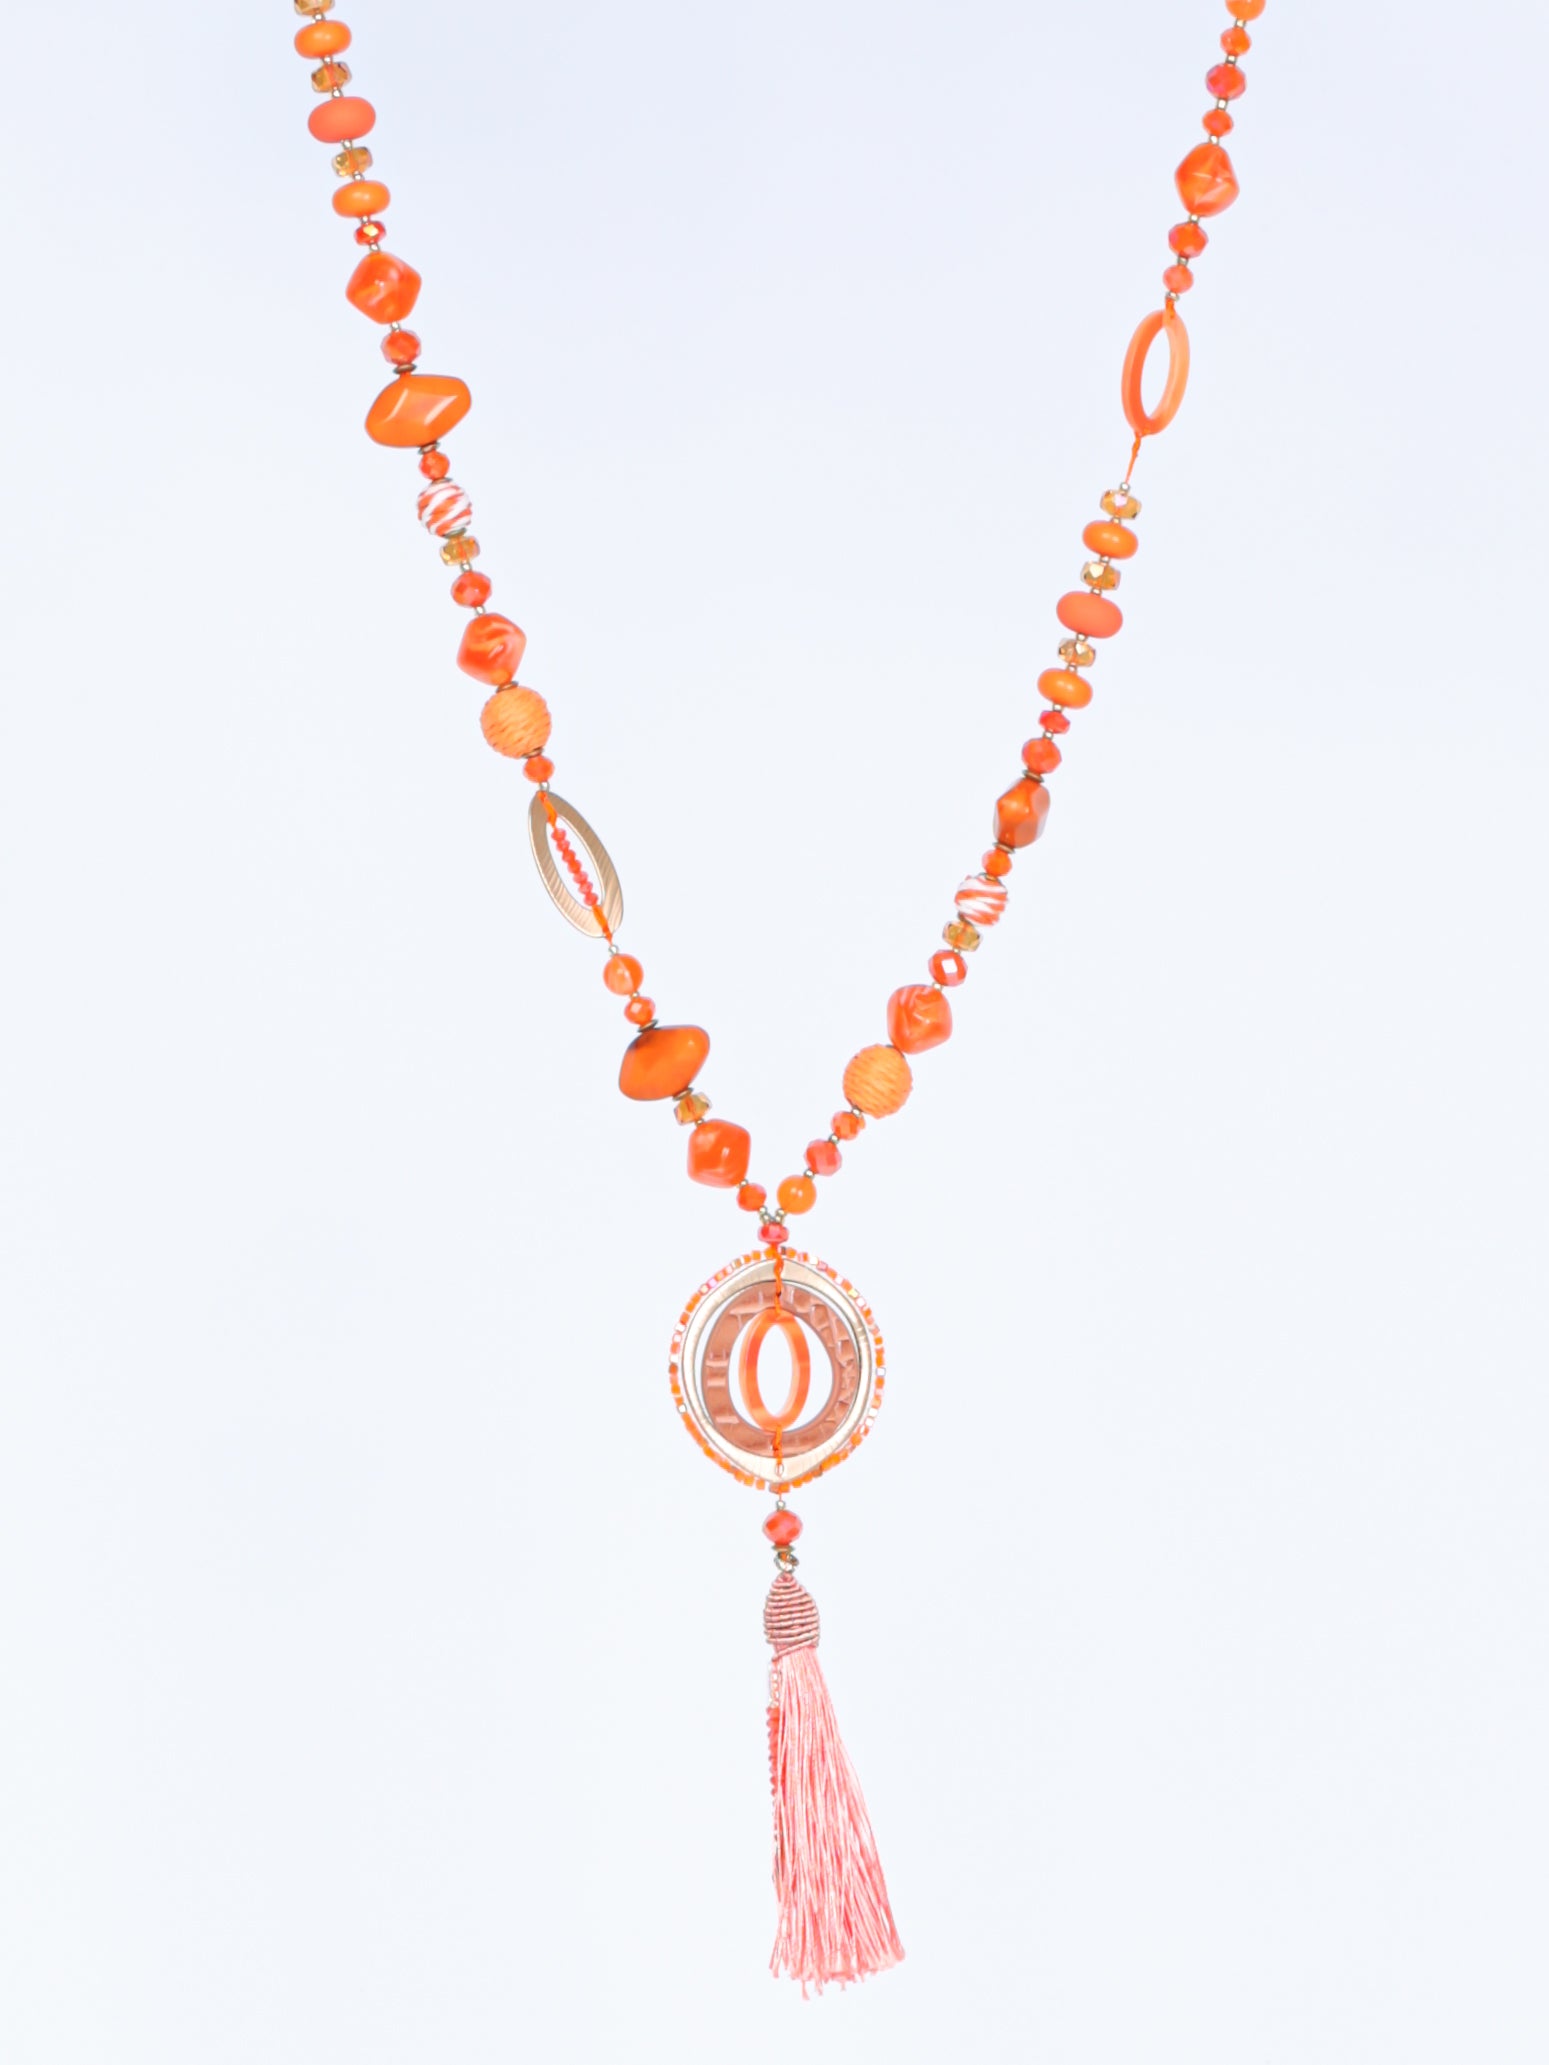 Necklace with pendant fringe